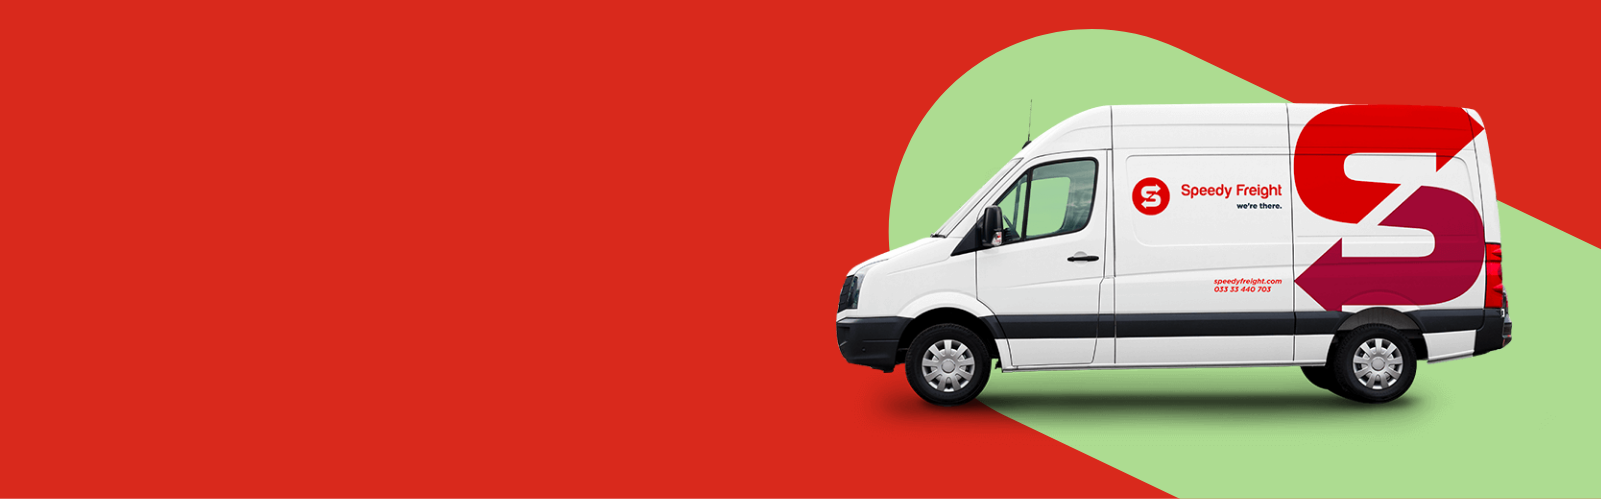 Speedy Freight UK Courier Service & Haulage Company Luton Van.